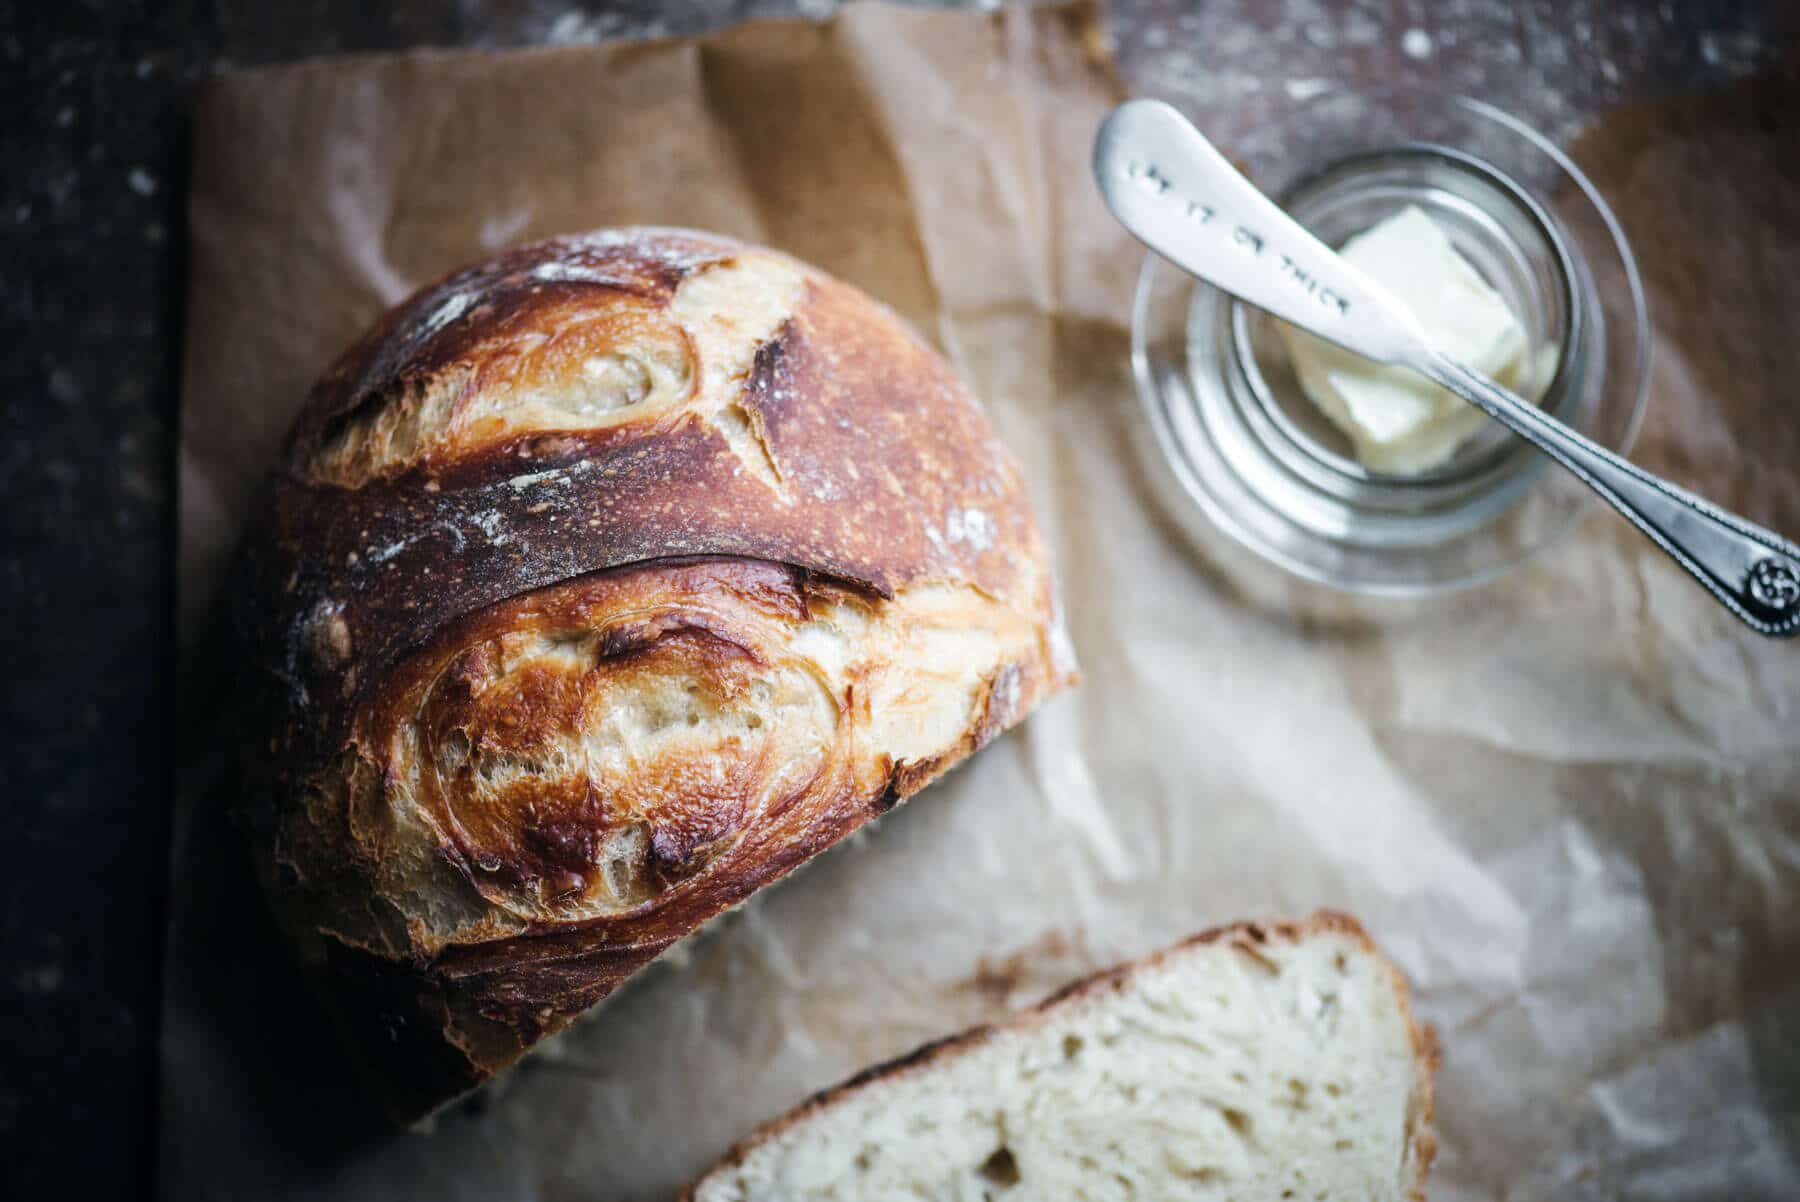 https://www.littlefiggy.com/wp-content/uploads/2021/08/Loaf-of-Dutch-Oven-Artisan-Bread-recipe.jpg